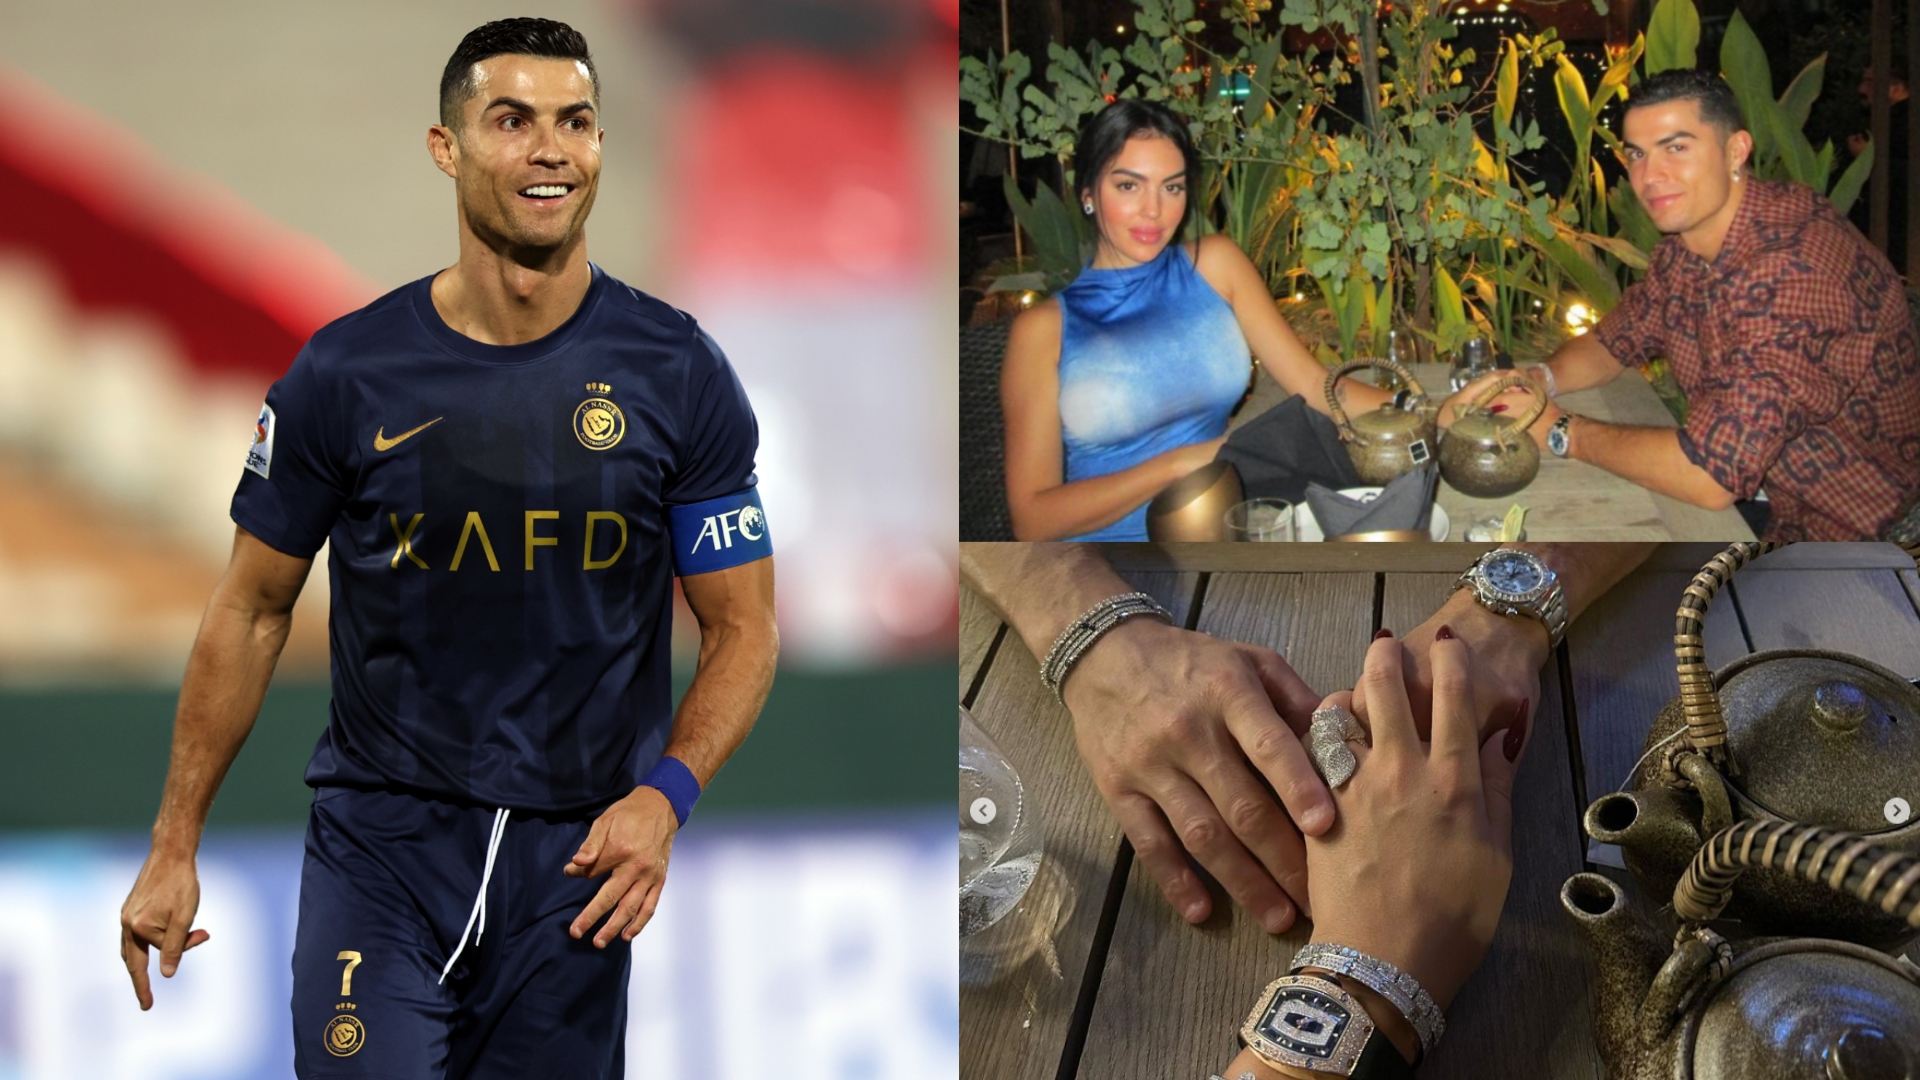 'My king' - Cristiano Ronaldo enjoys date night at swanky restaurant in Riyadh with girlfriend Georgina Rodriguez following electric start to Saudi Pro League season